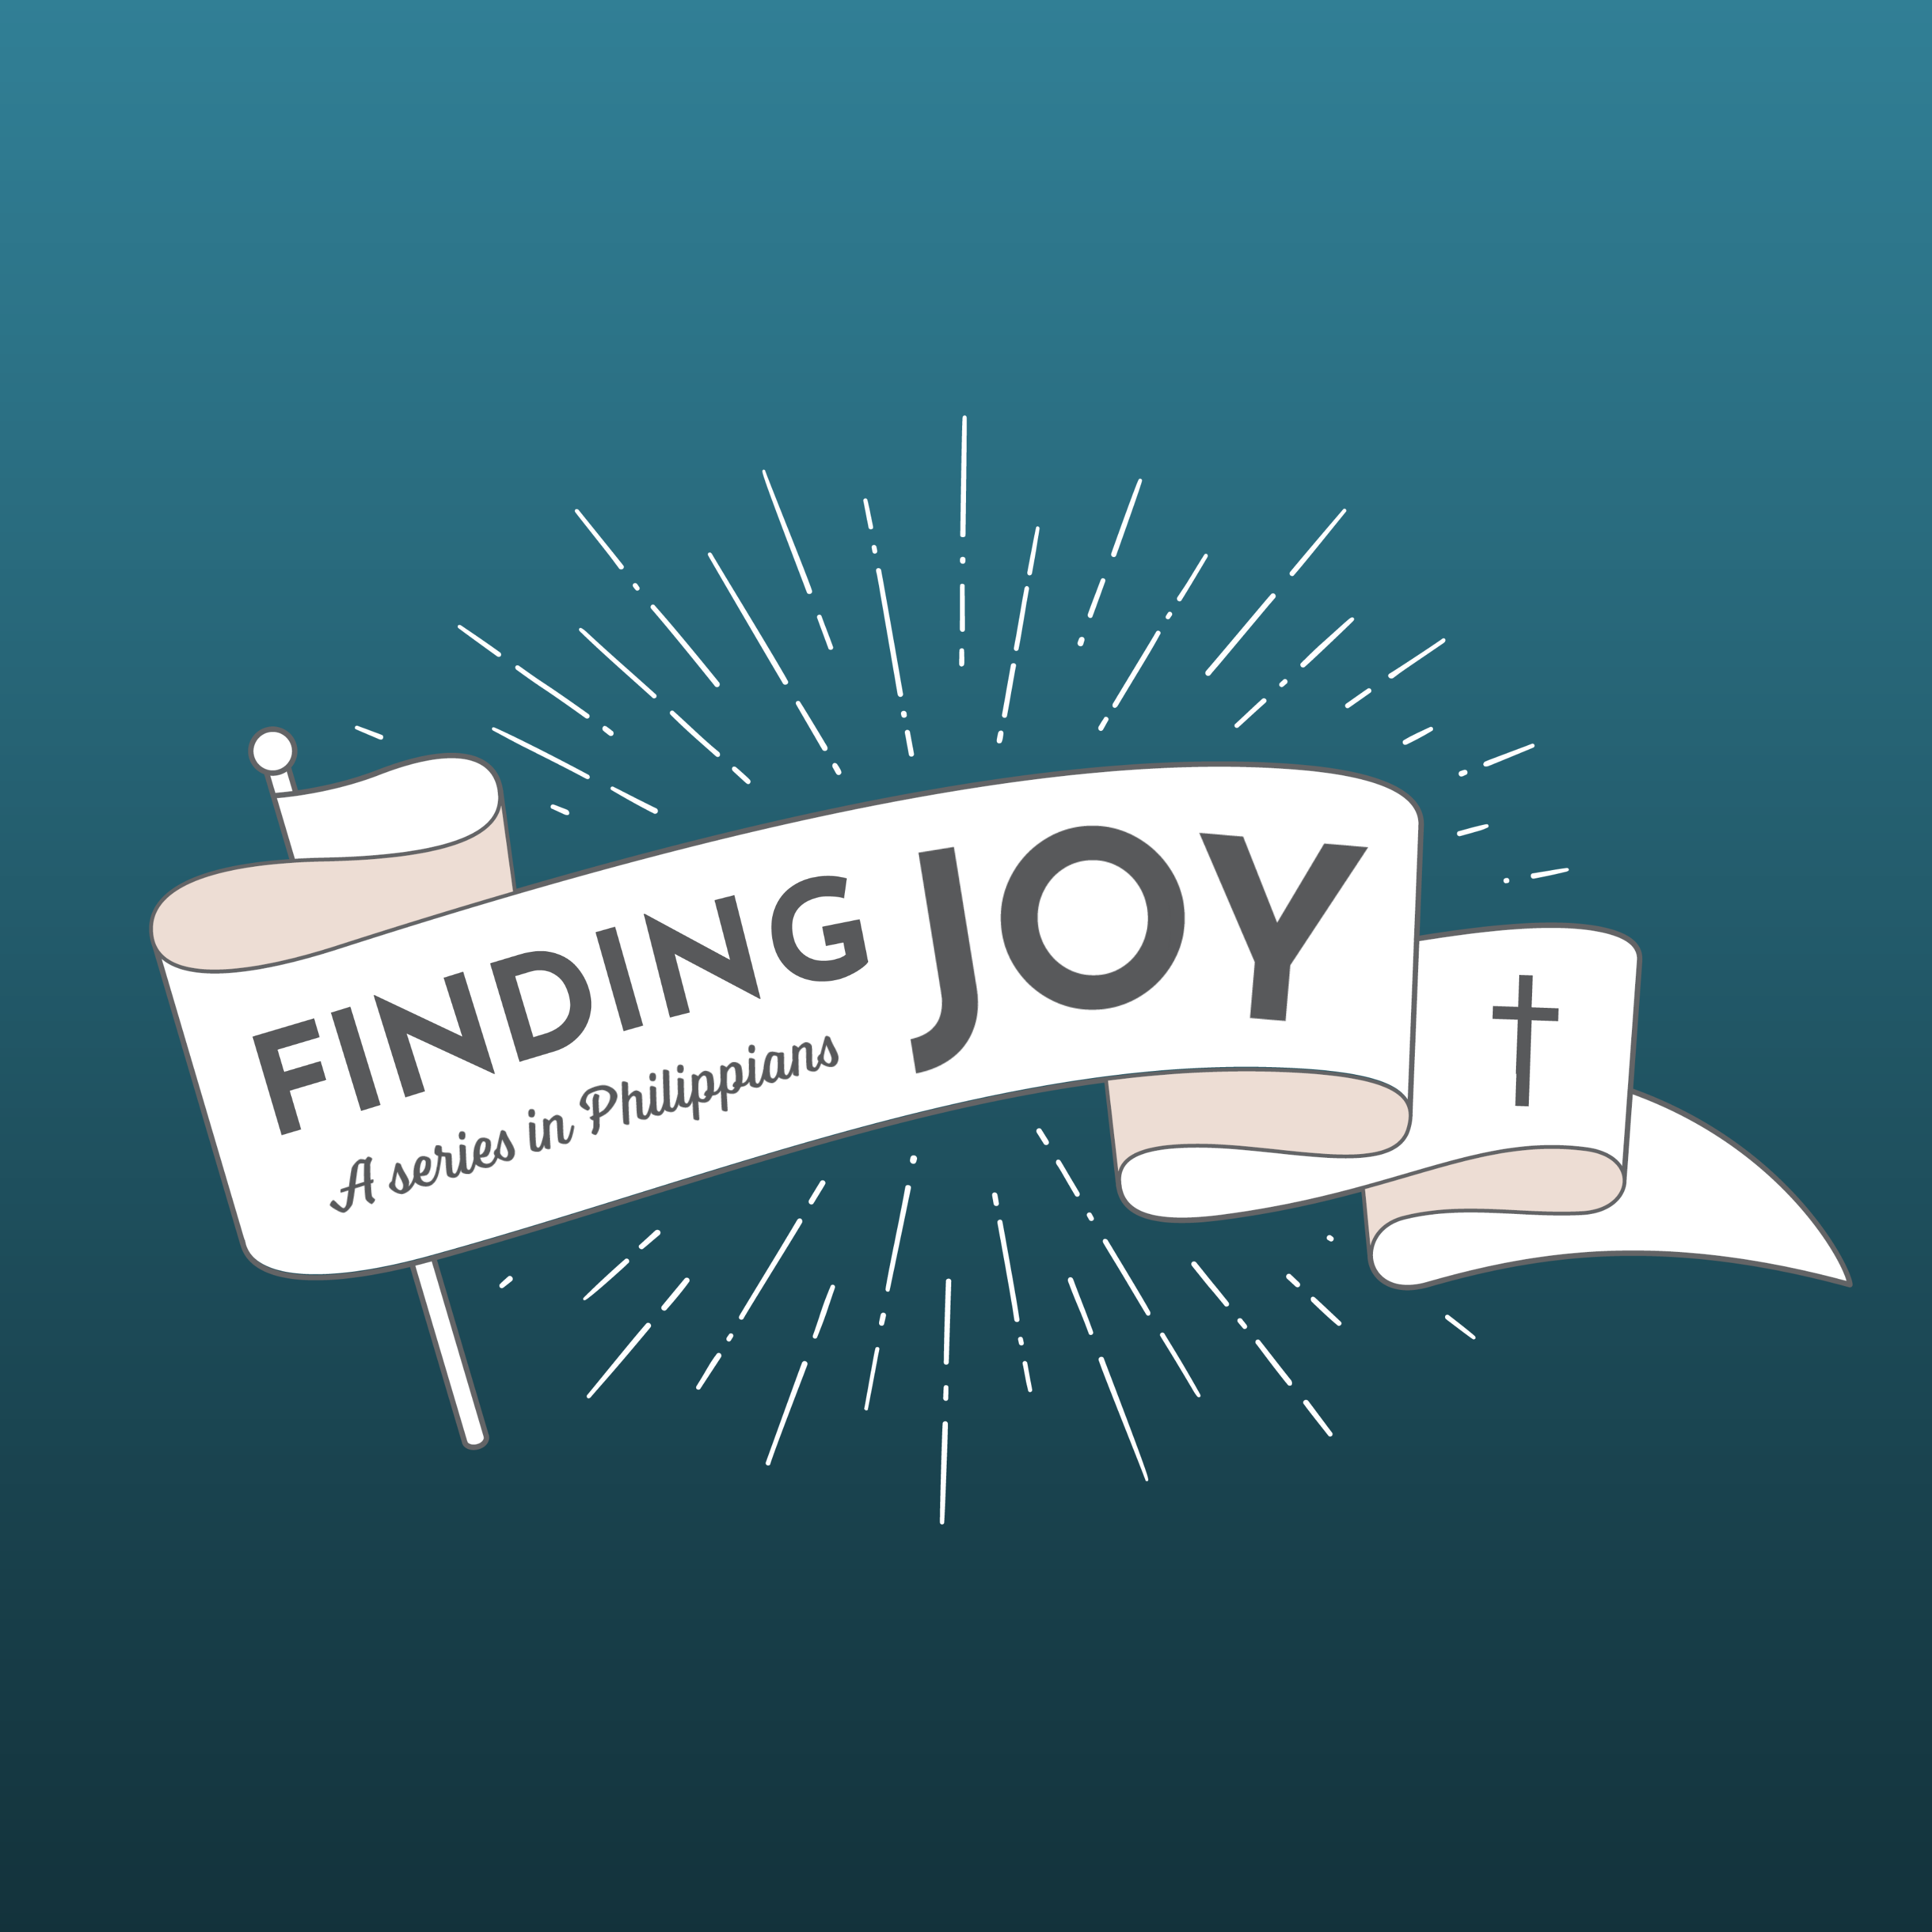 Joy in Gospel Partnership